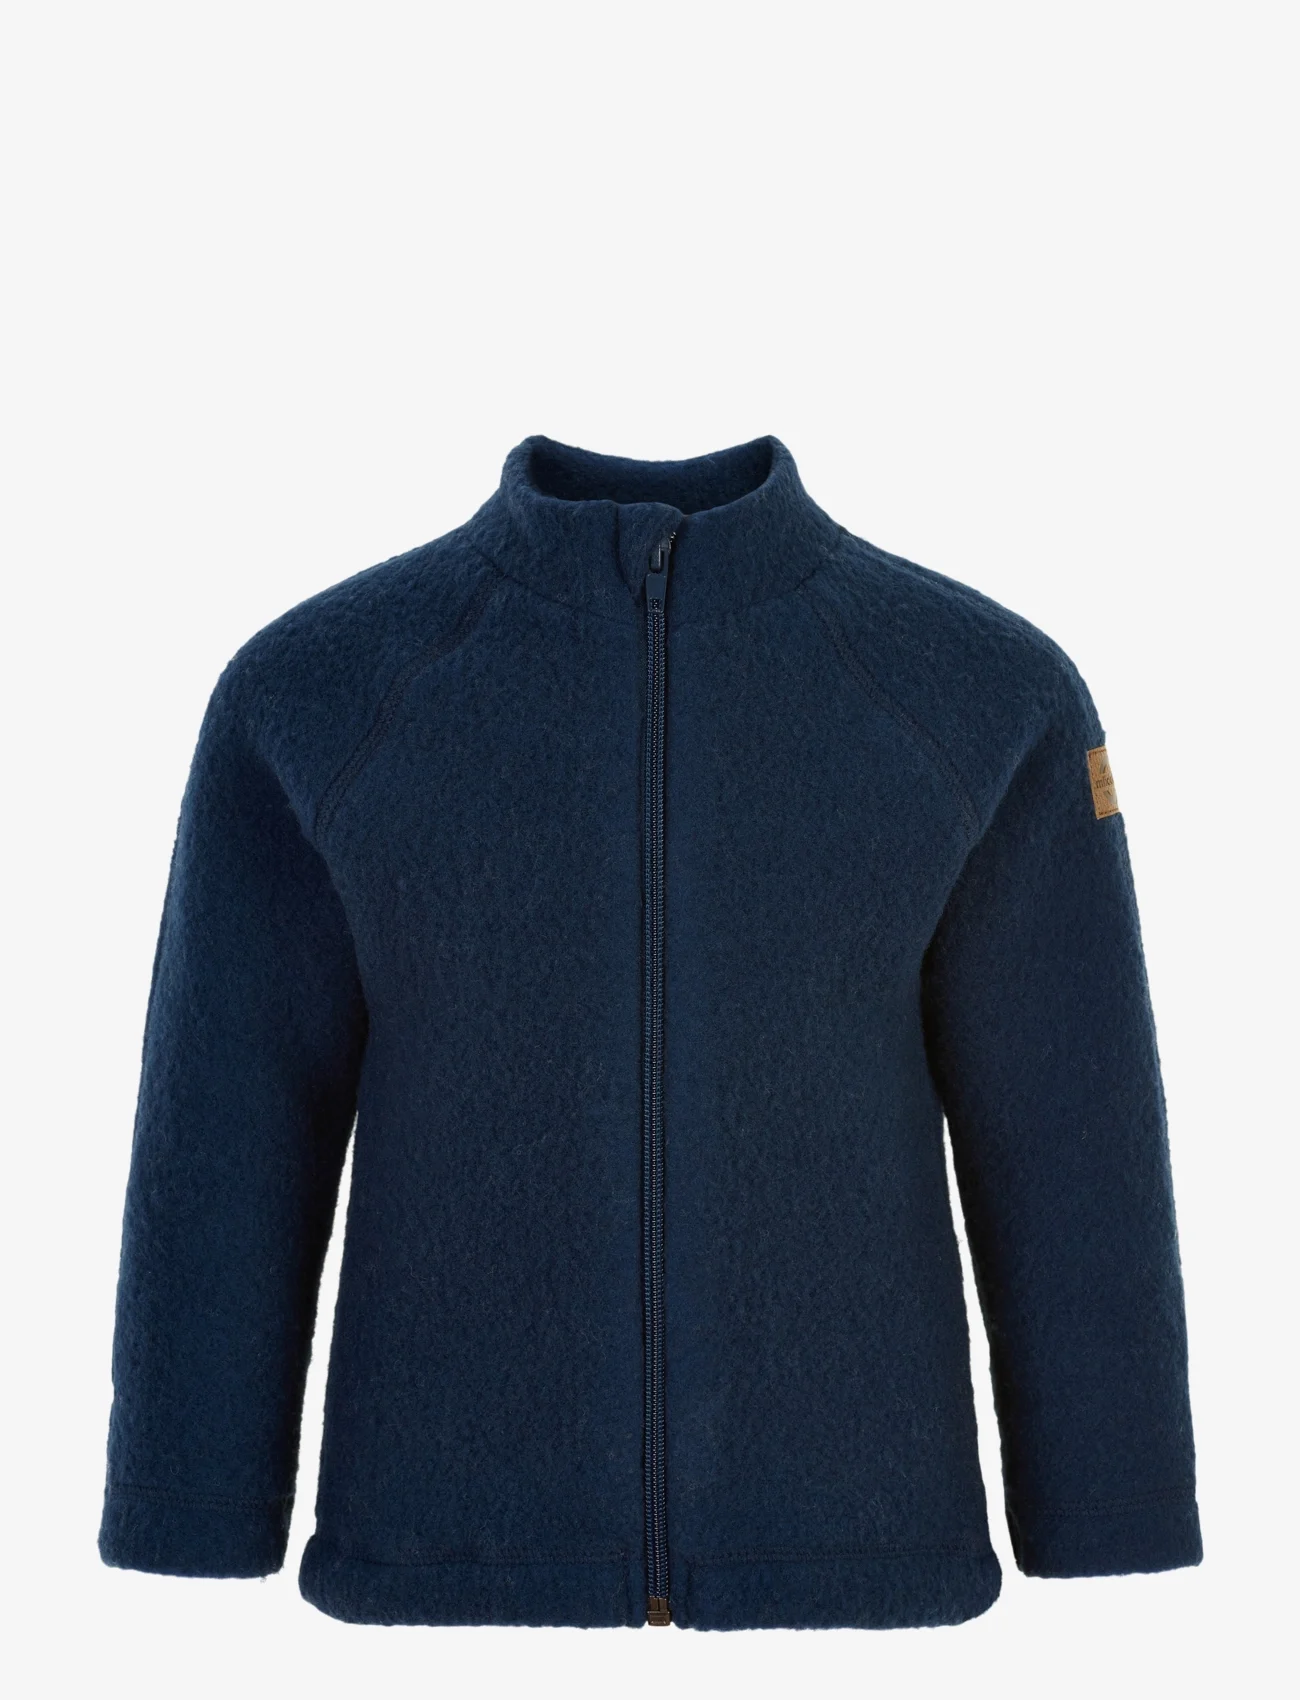 mikk-line - Wool Baby Jacket - fleece jacket - blue nights - 0